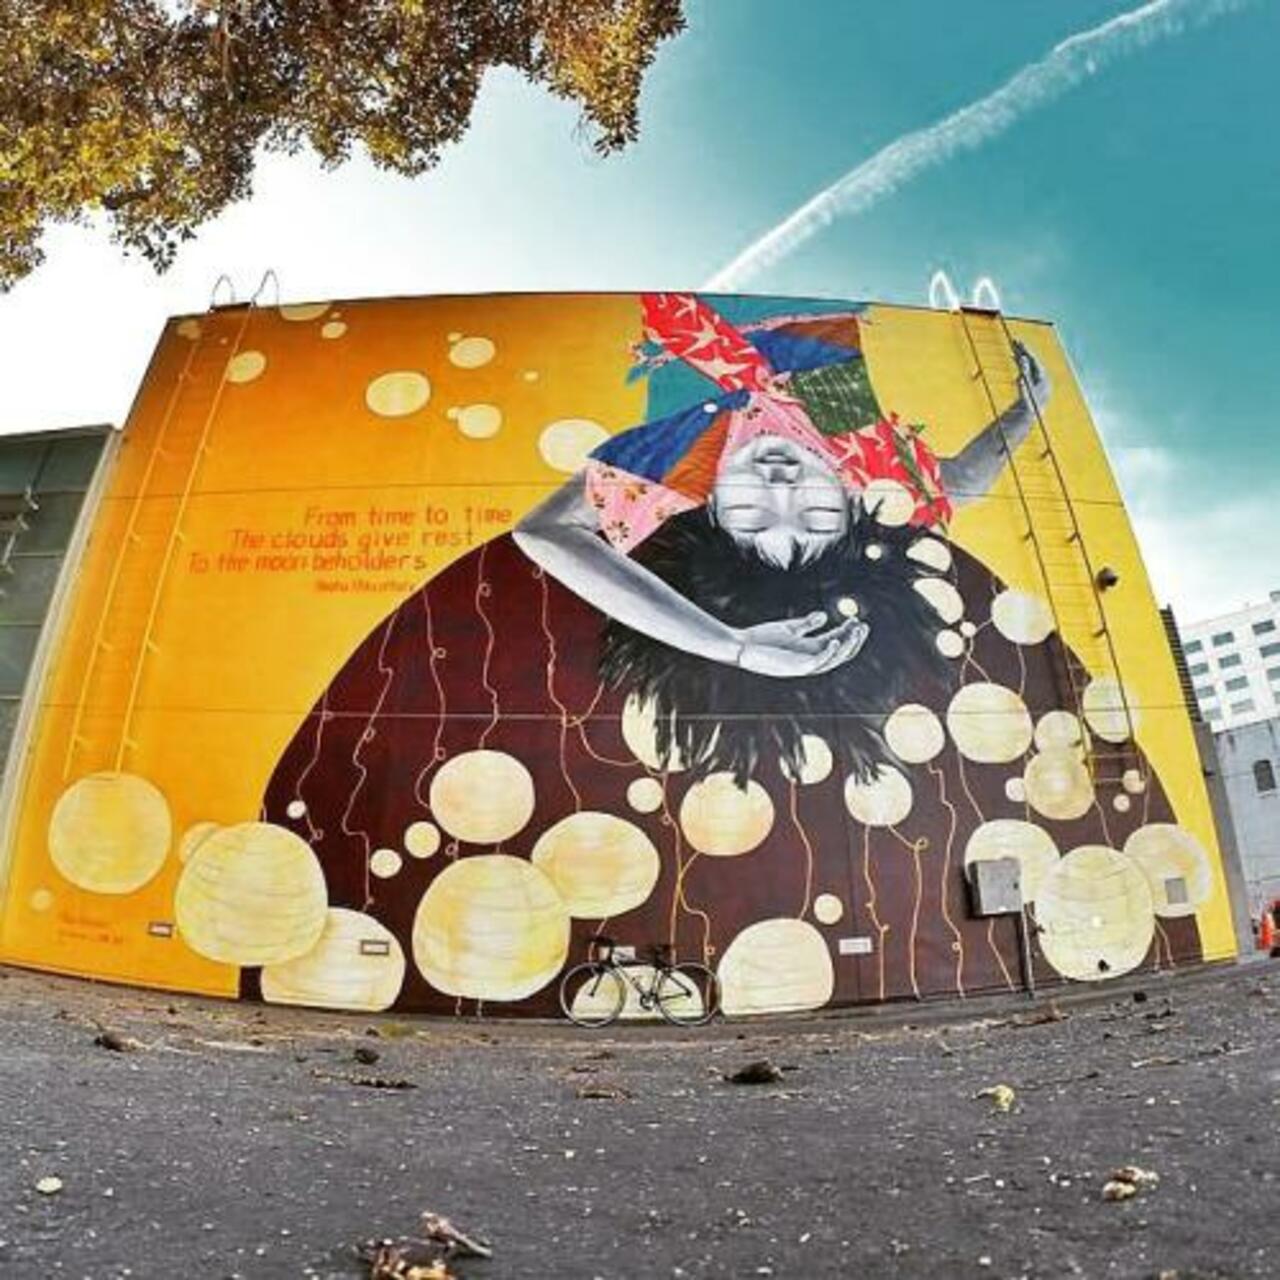 ##Streetart ##Sprayart ##Stencil ##Graffiti ... - #Mural - #ZangArt #Showcase - http://bit.ly/1EyBf39 http://t.co/uz3wGZSYJC